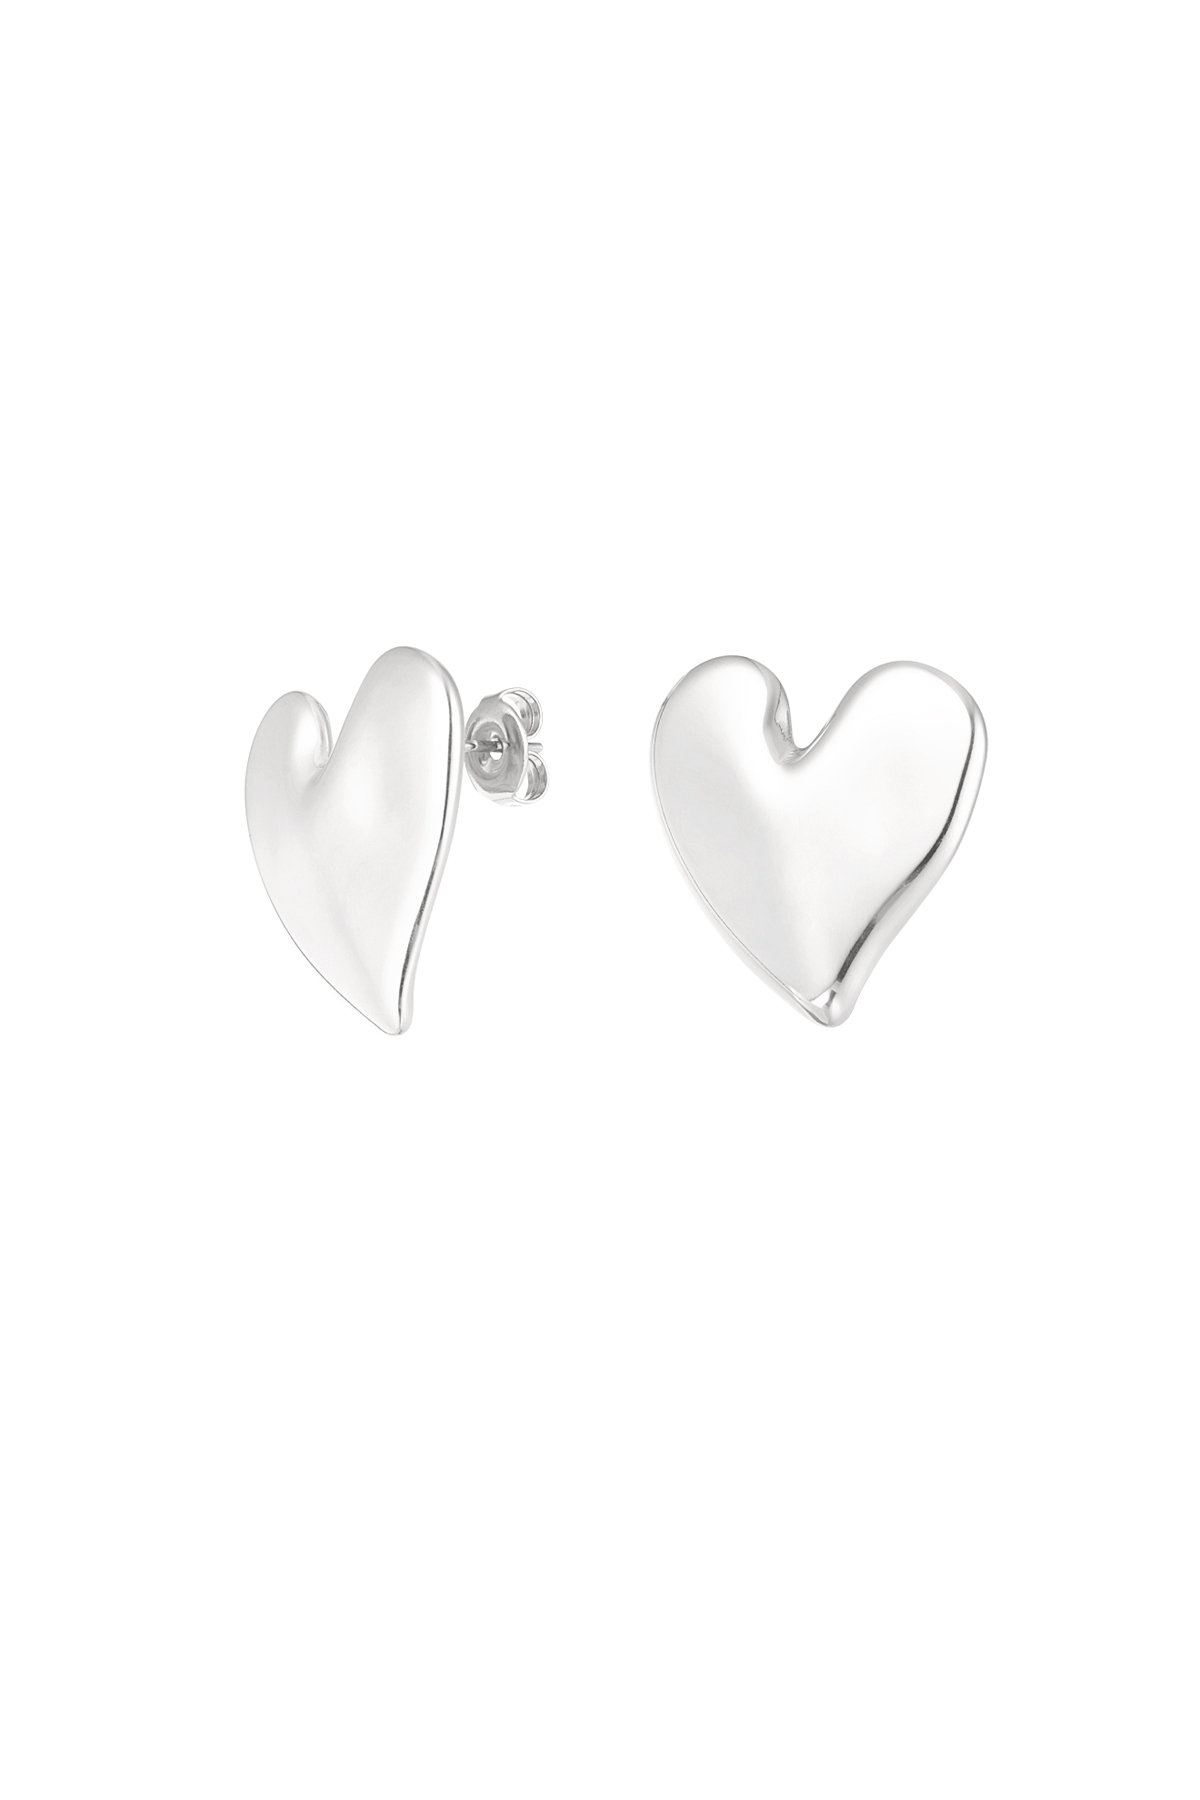 Earrings love first - silver h5 